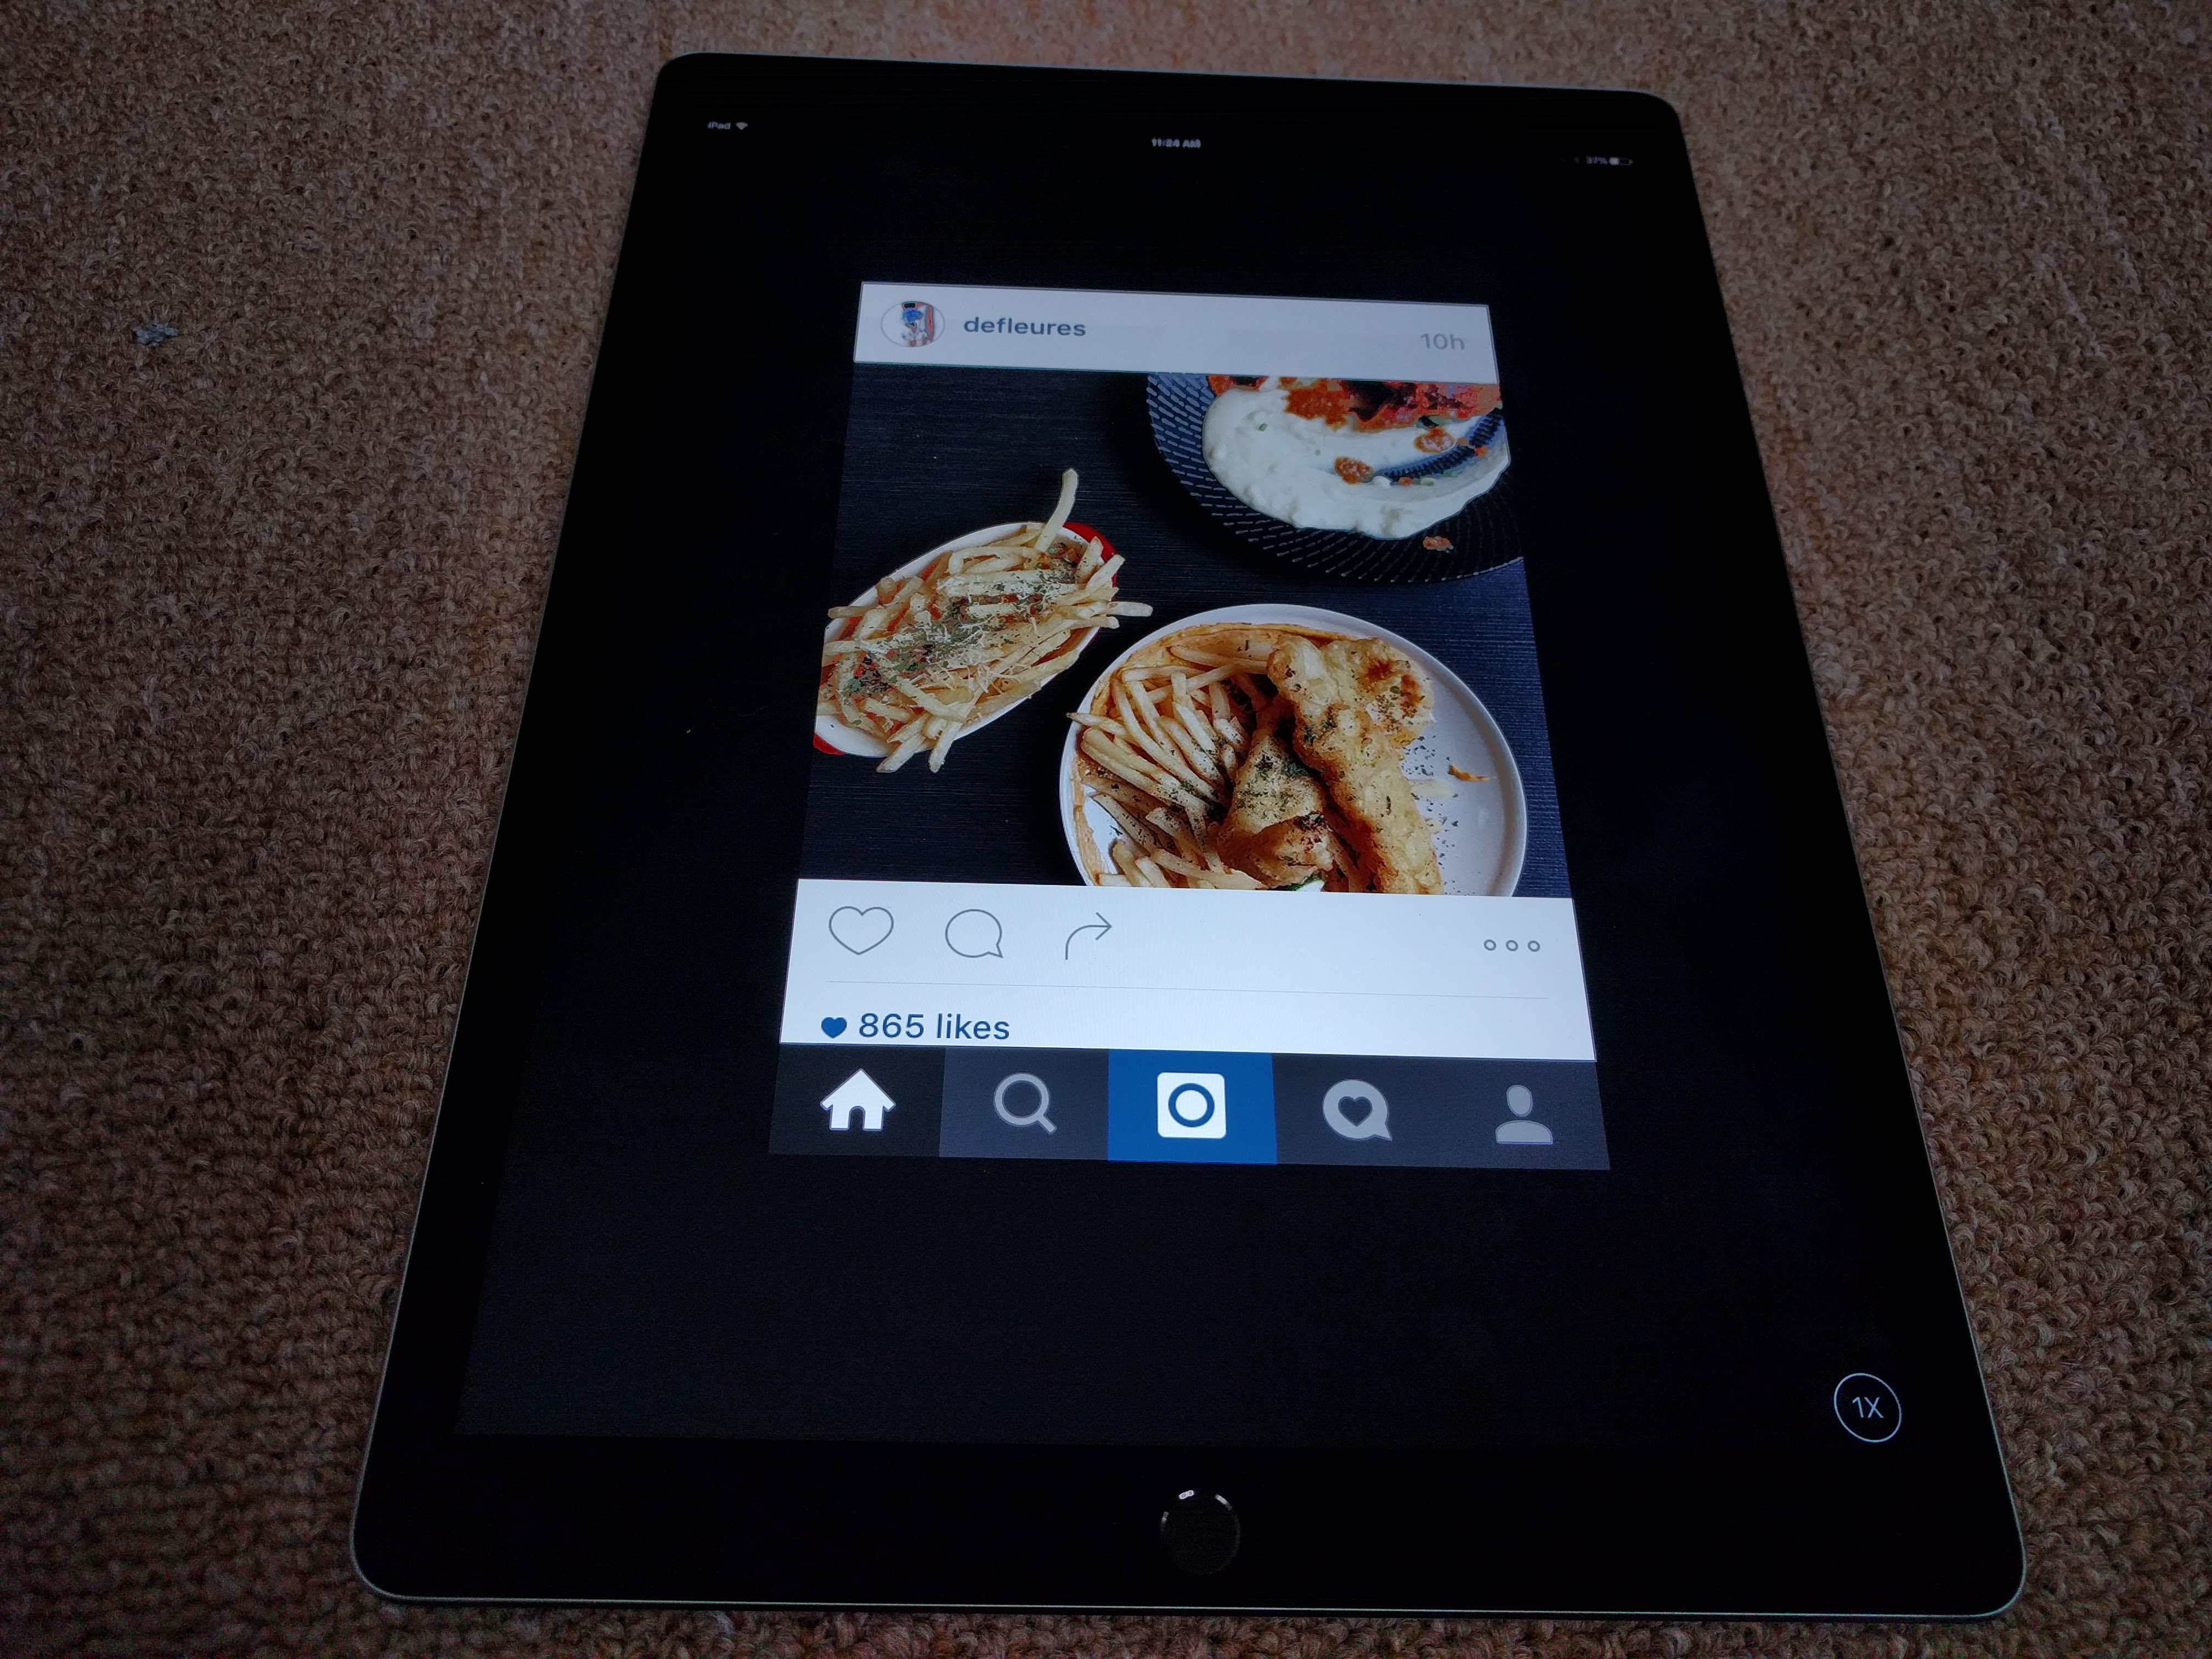 Instagram on the iPad Pro.